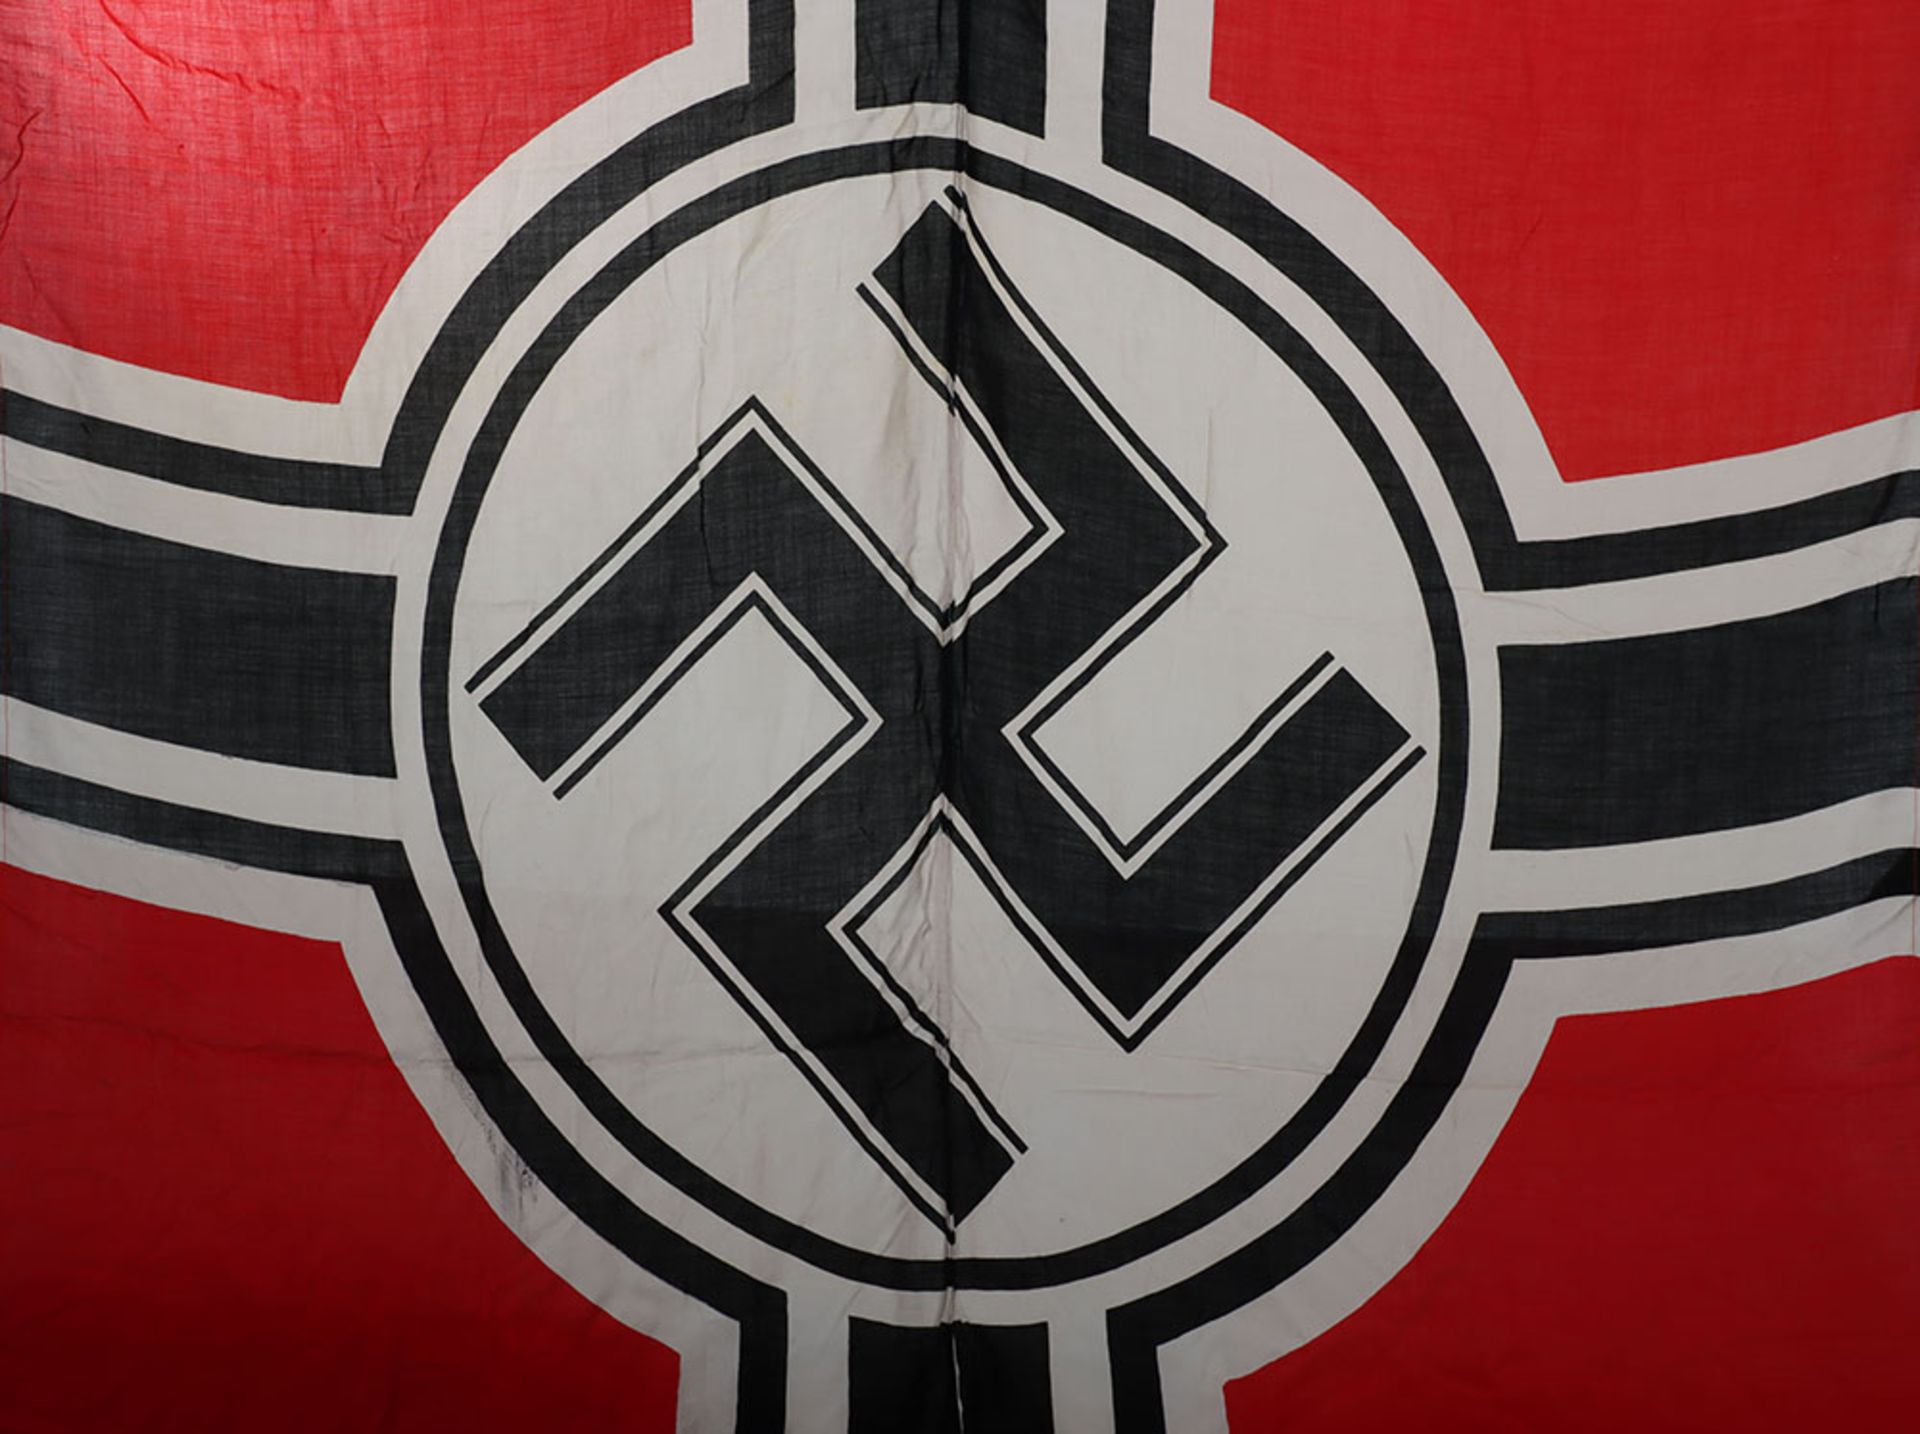 Large WW2 German Battle Flag (Reichskriegsflagge) - Image 7 of 11